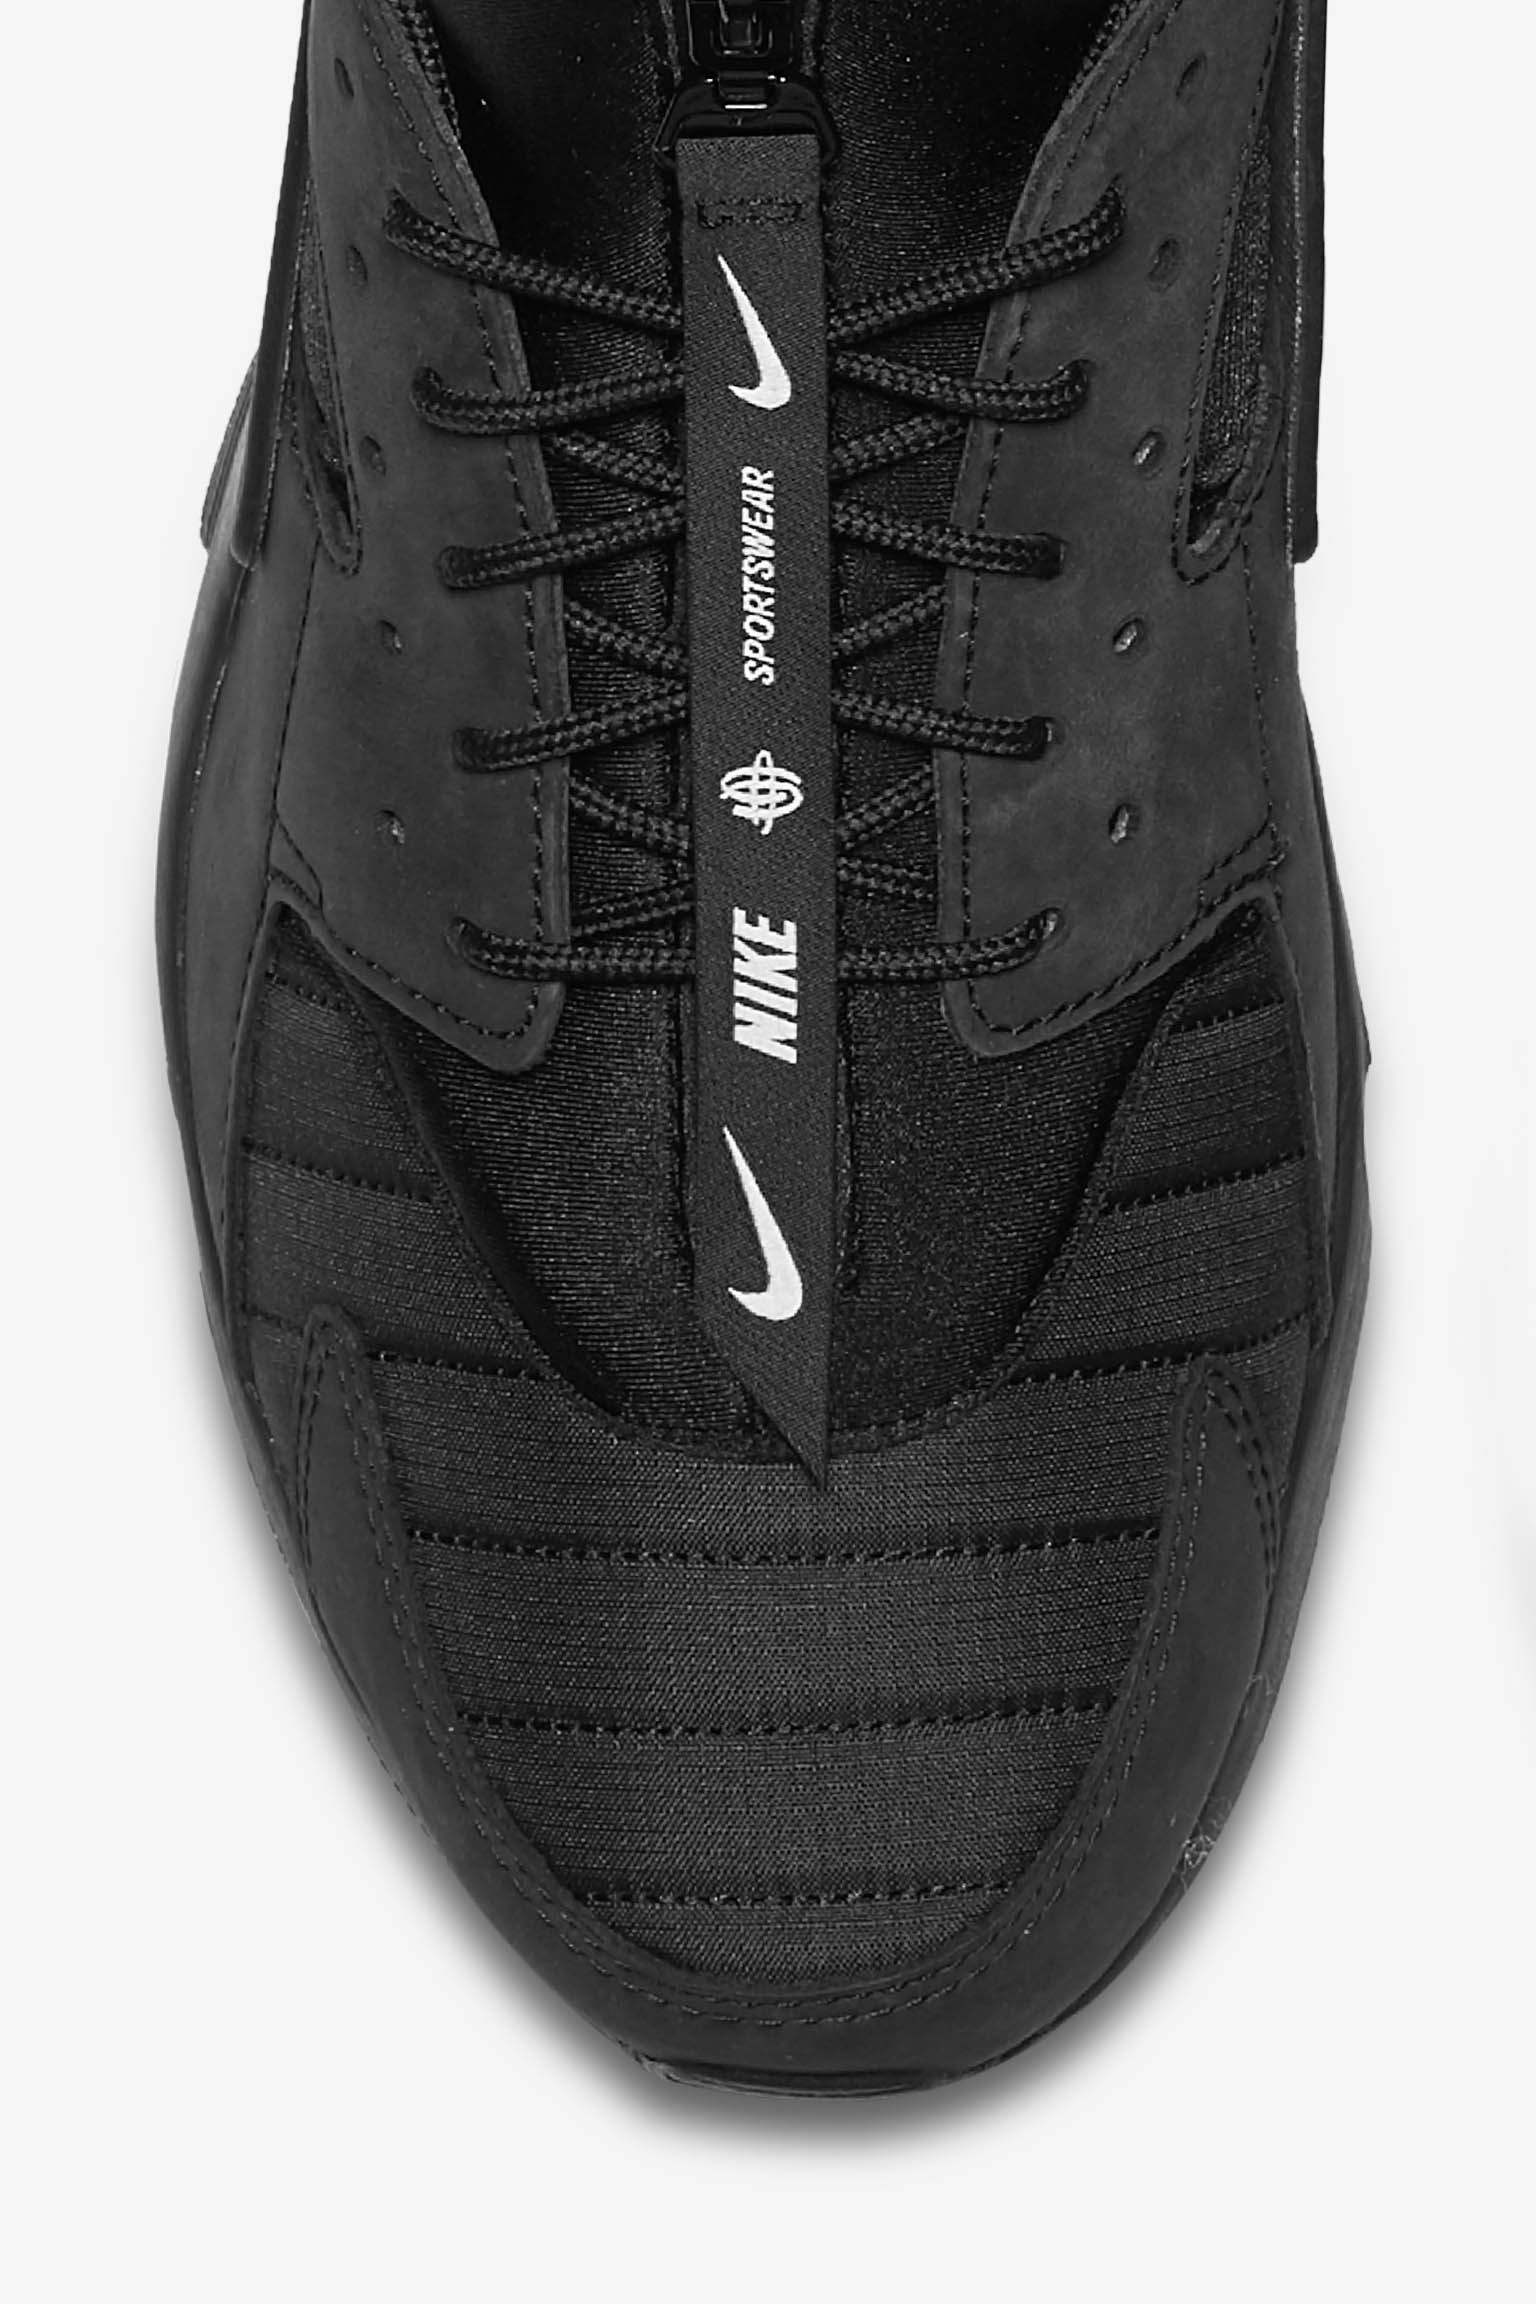 Nike Air Huarache Run 'Black & White' Release Date. Nike SNKRS